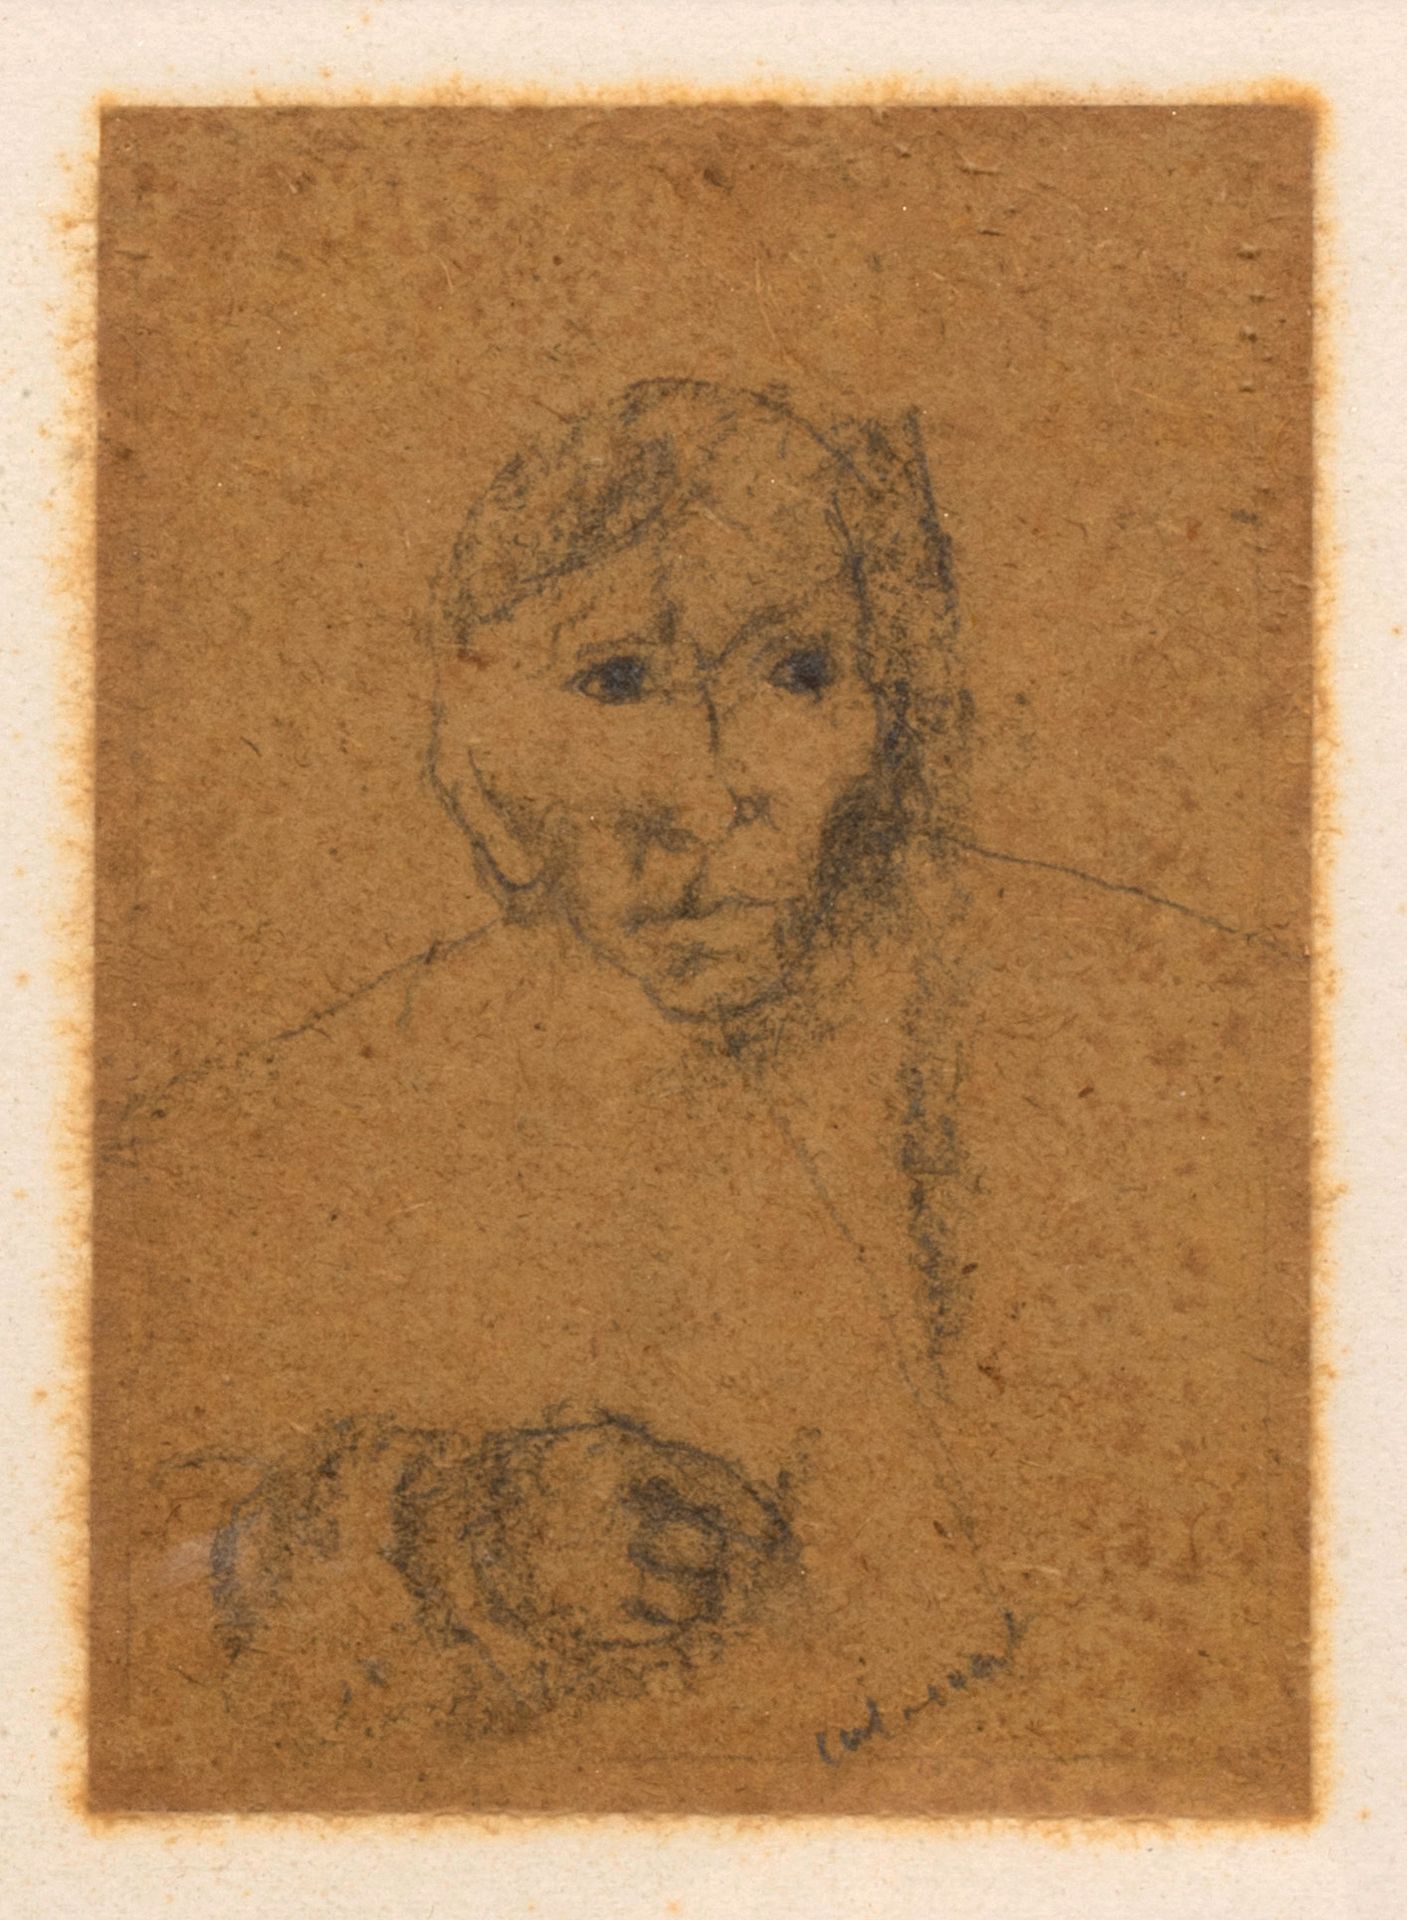 PIERRE TAL COAT (1905-1985) 男子肖像
米色纸上的炭笔和铅笔，涂在牛皮纸上，右下角有签名，有框架 14.5 x 10.5 cm (正在&hellip;